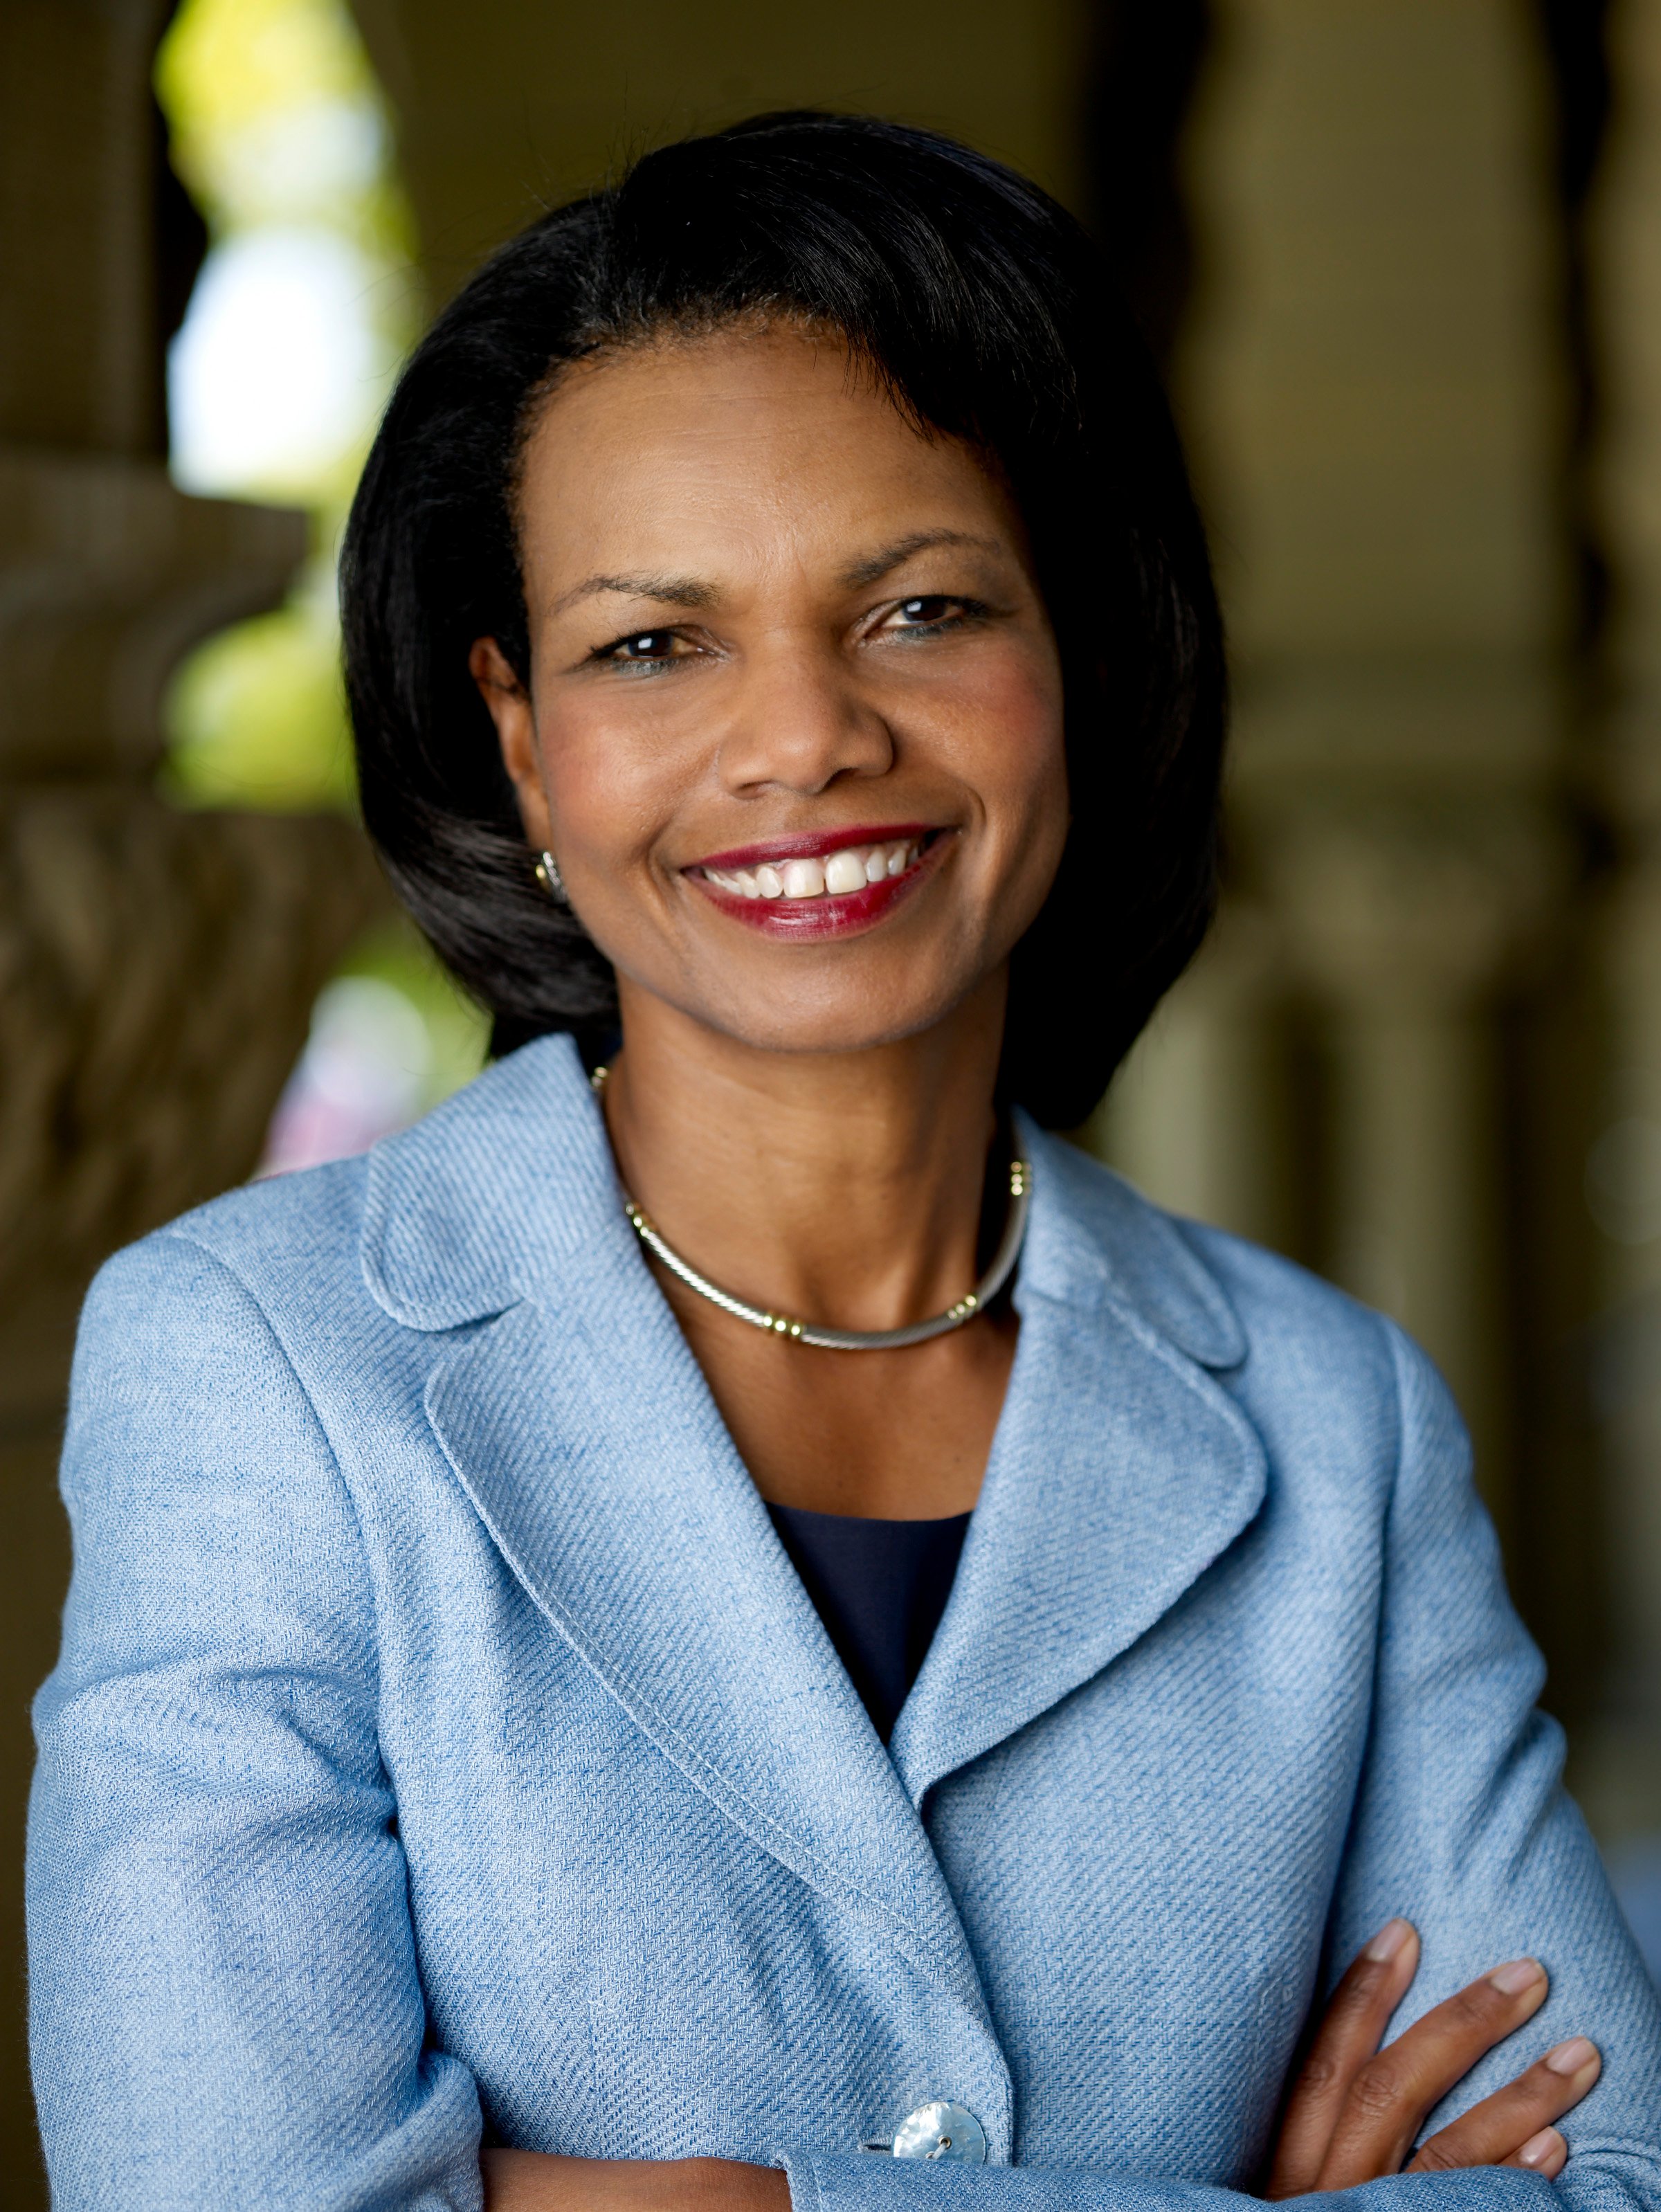 Condoleezza Rice RSNA 2013 U.S. Secretary of State Imaging 